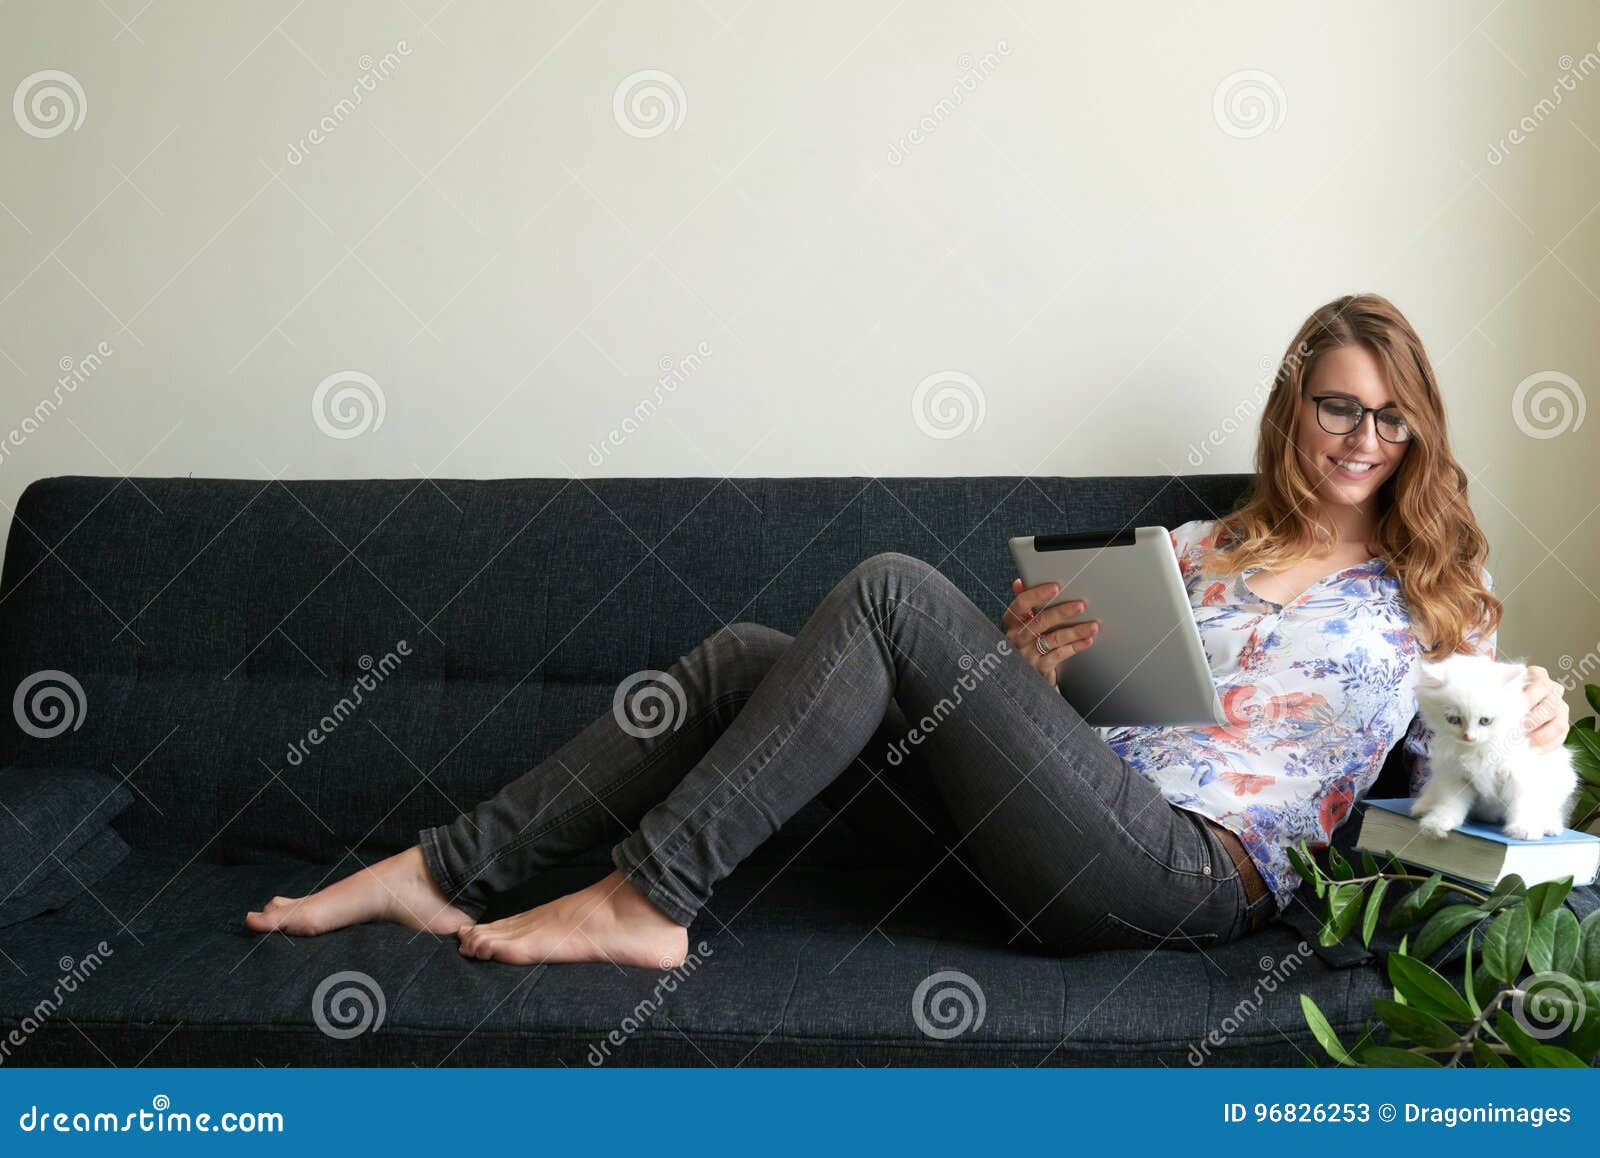 Beautiful Woman With Kitten Stock Image Image Of Caucasian Female